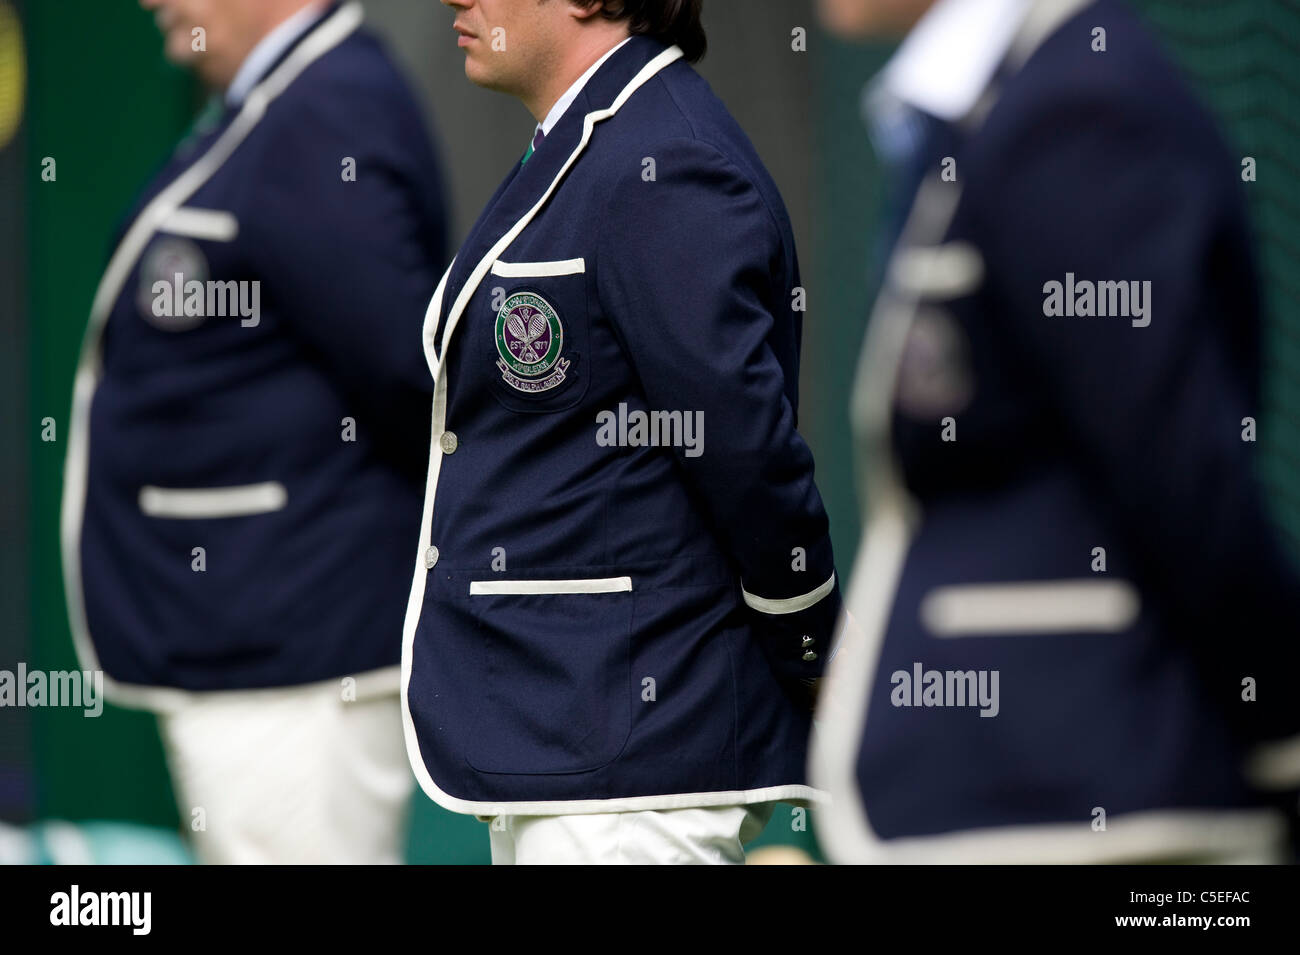 2,492 Ralph Lauren Wimbledon Photos & High Res Pictures - Getty Images